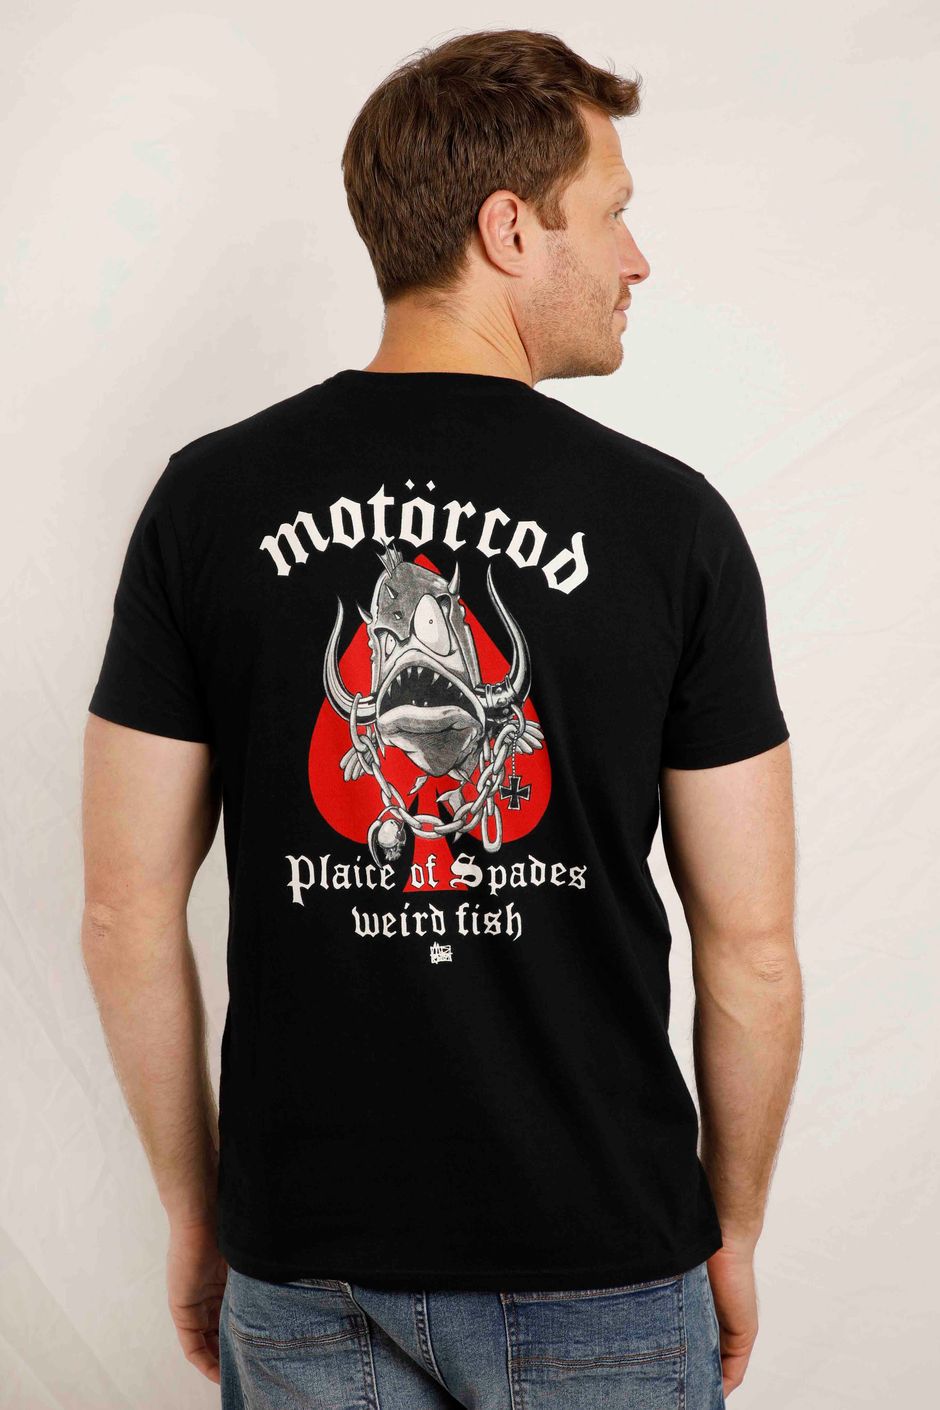 Motorcod Artist T-Shirt Black